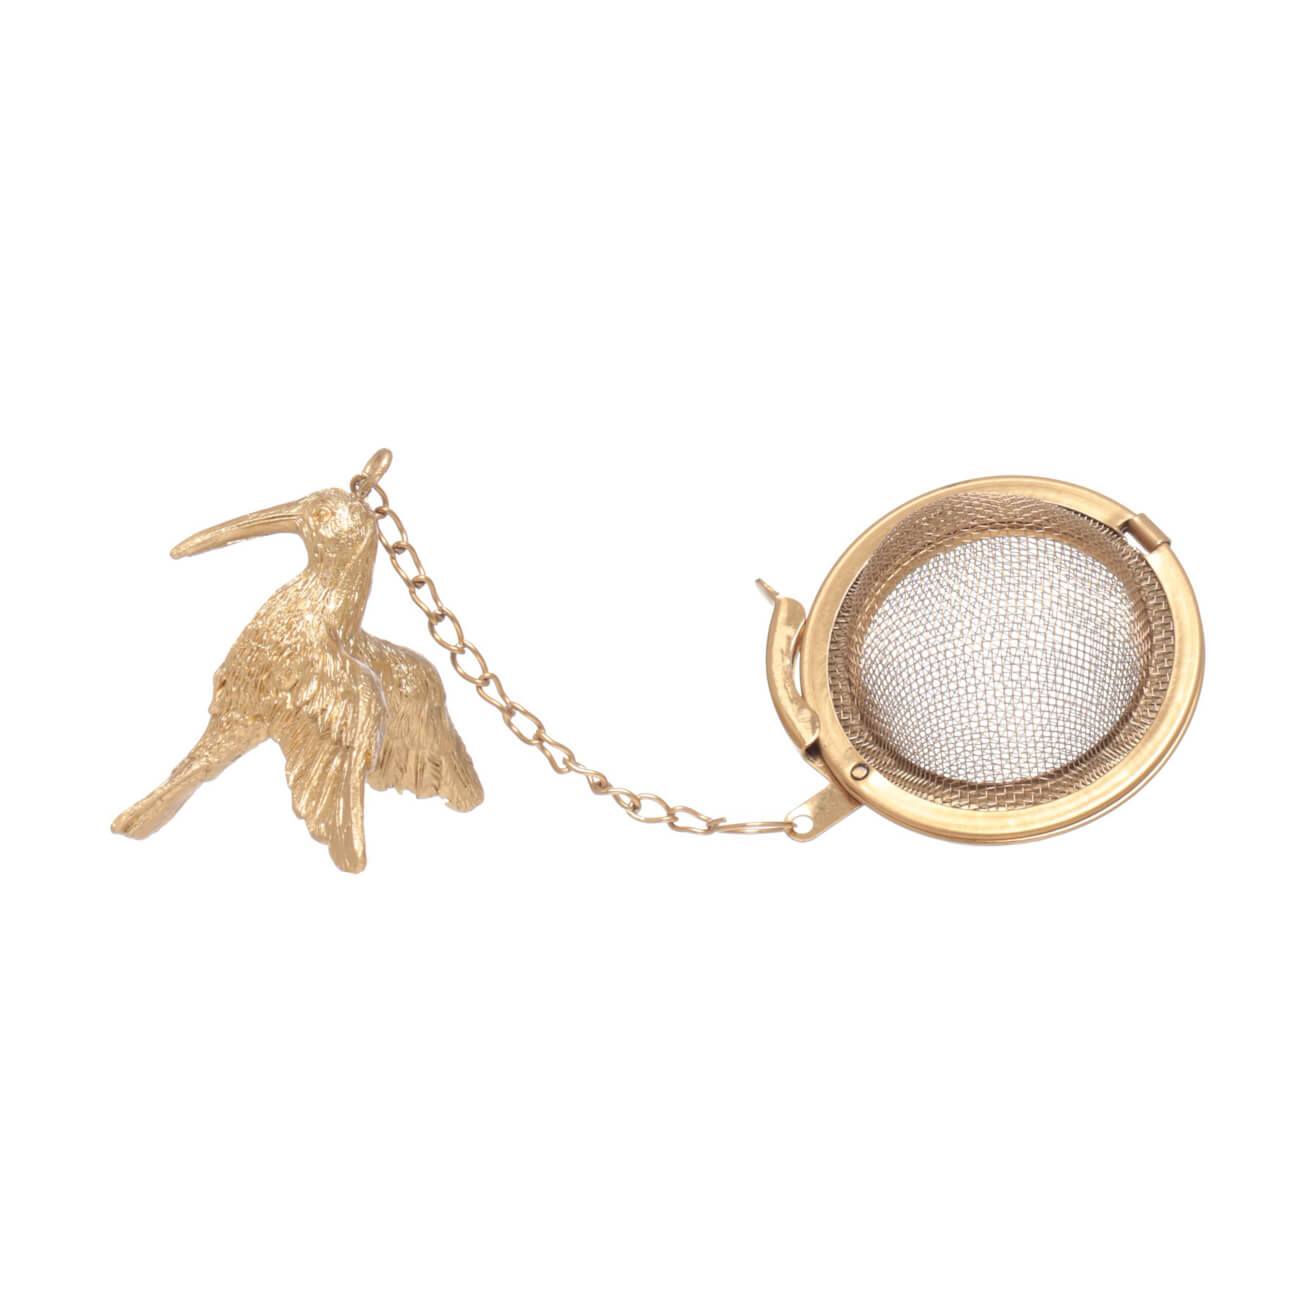 Tea strainer, 5 cm, polyresin / metal, golden, Hummingbird, Paradise garden изображение № 1